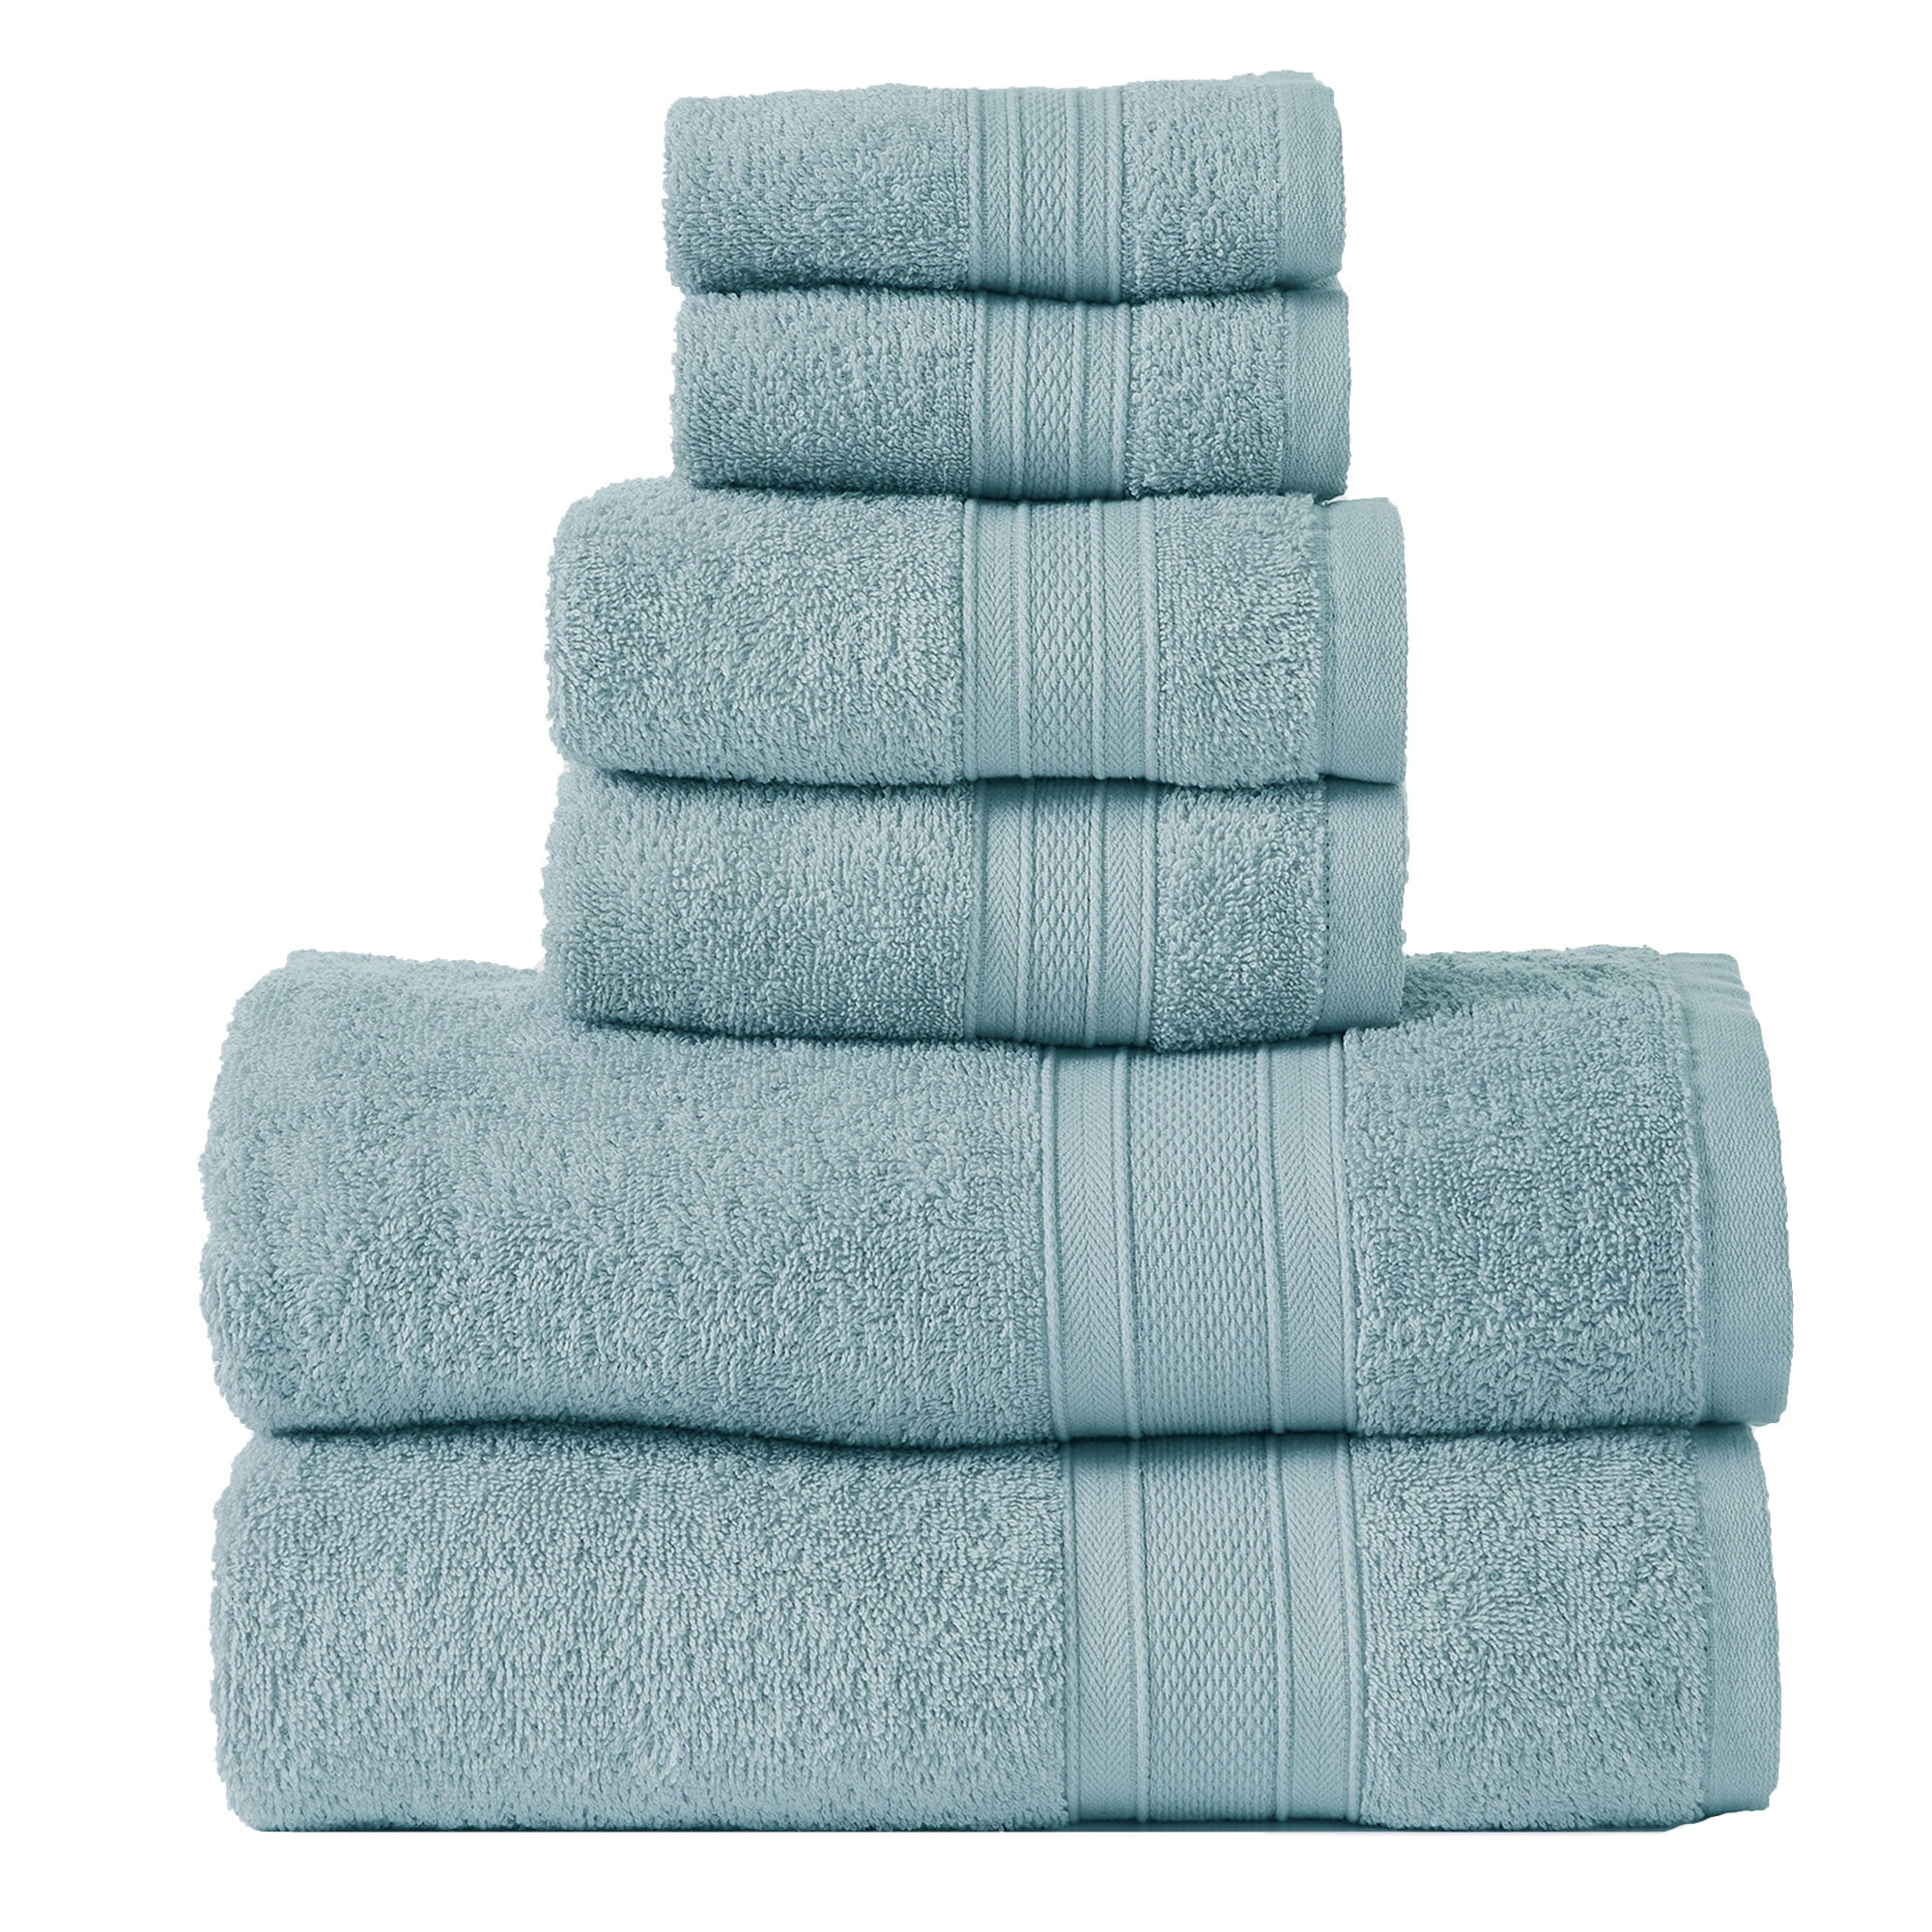 Bath Towel Cotton Set Bath Sheet 36x71 Inch 1400GSM Extra Soft Absorbent US Ship 